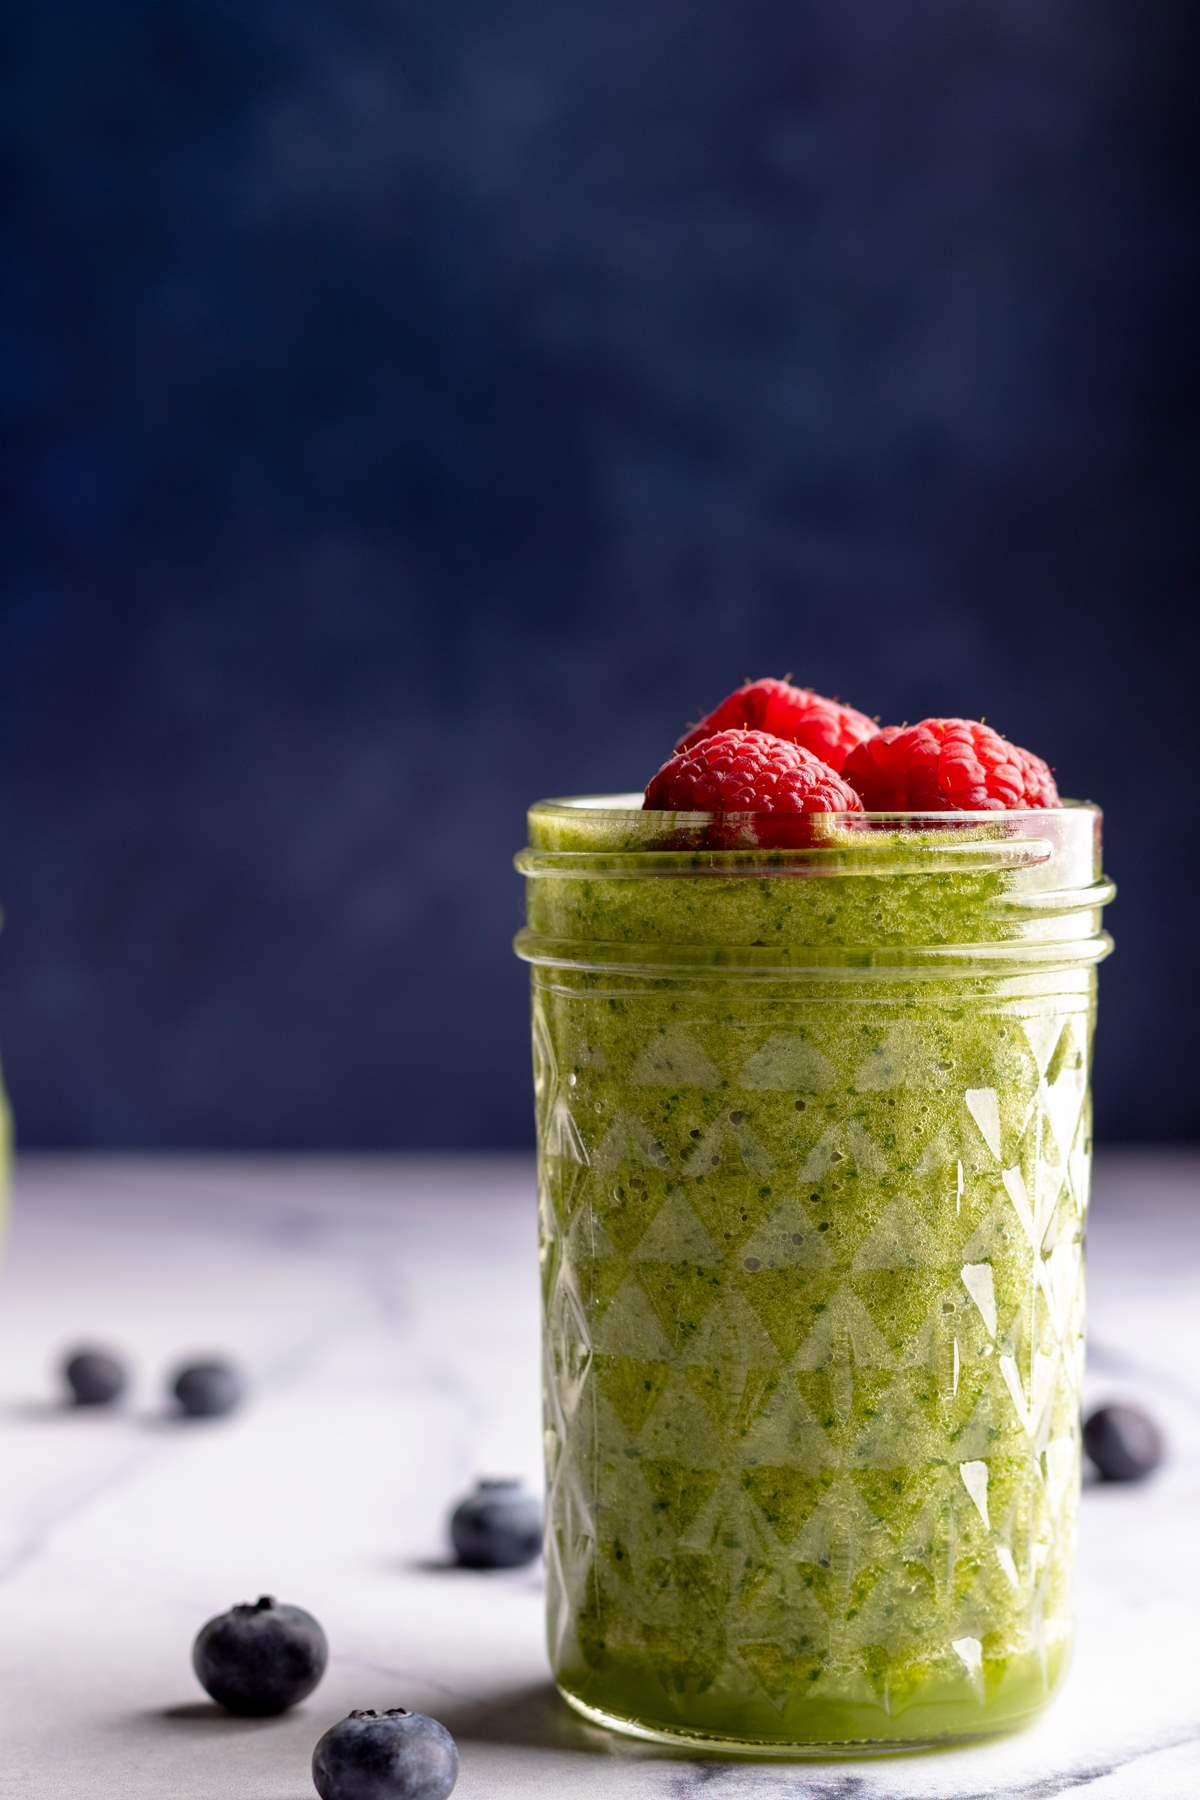 Green smoothie in a jar closeup shot.